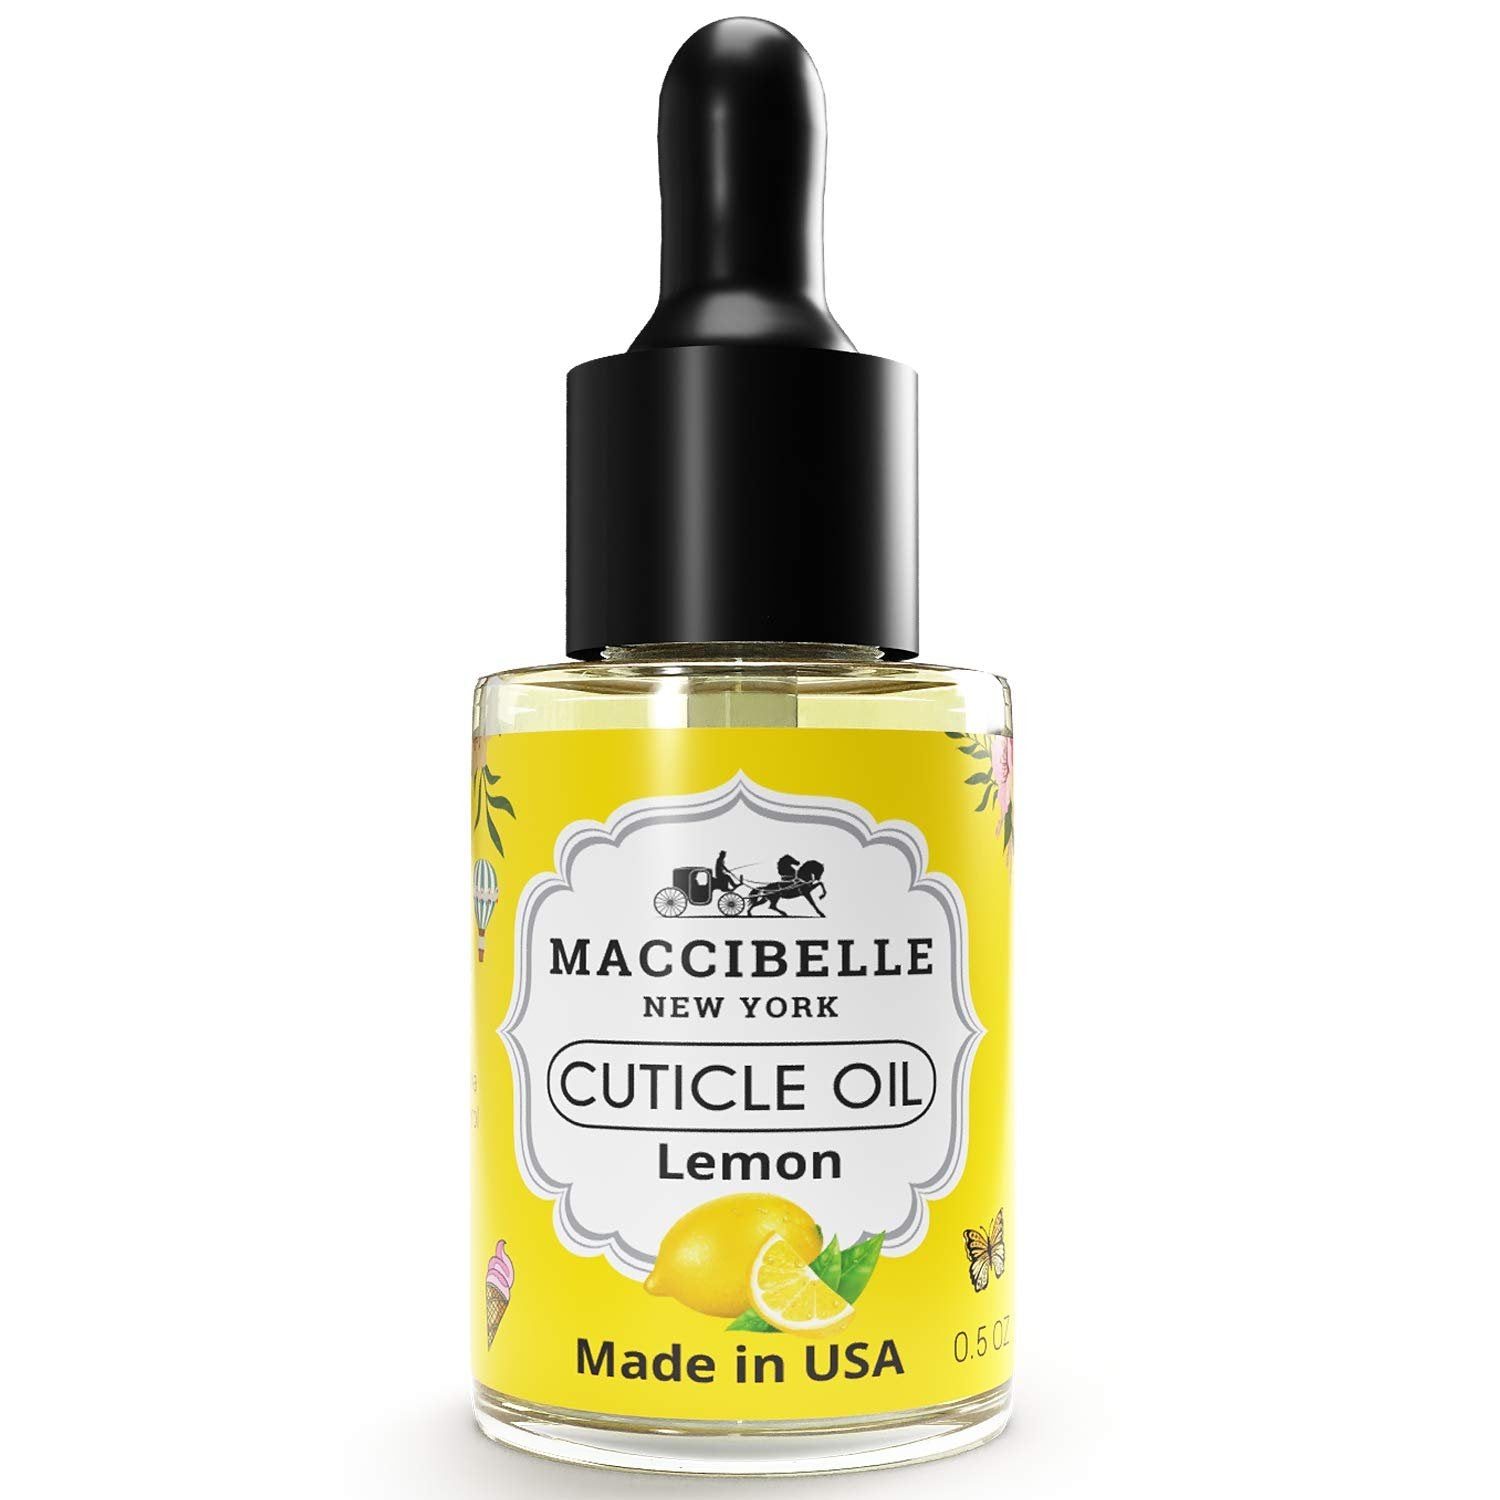 Maccibelle Cuticle Oil Heals Dry Cracked Cuticles 0.5 oz 2 Bottles (Lemon)